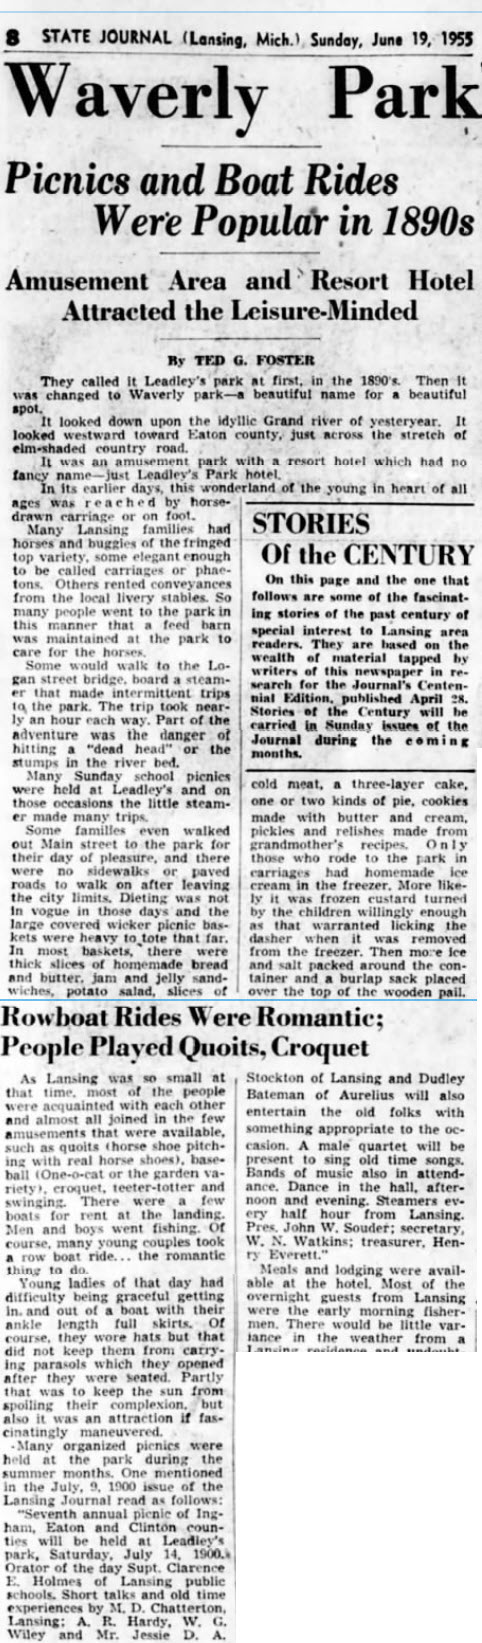 Waverly Park - JUNE 19 1955 ARTICLE